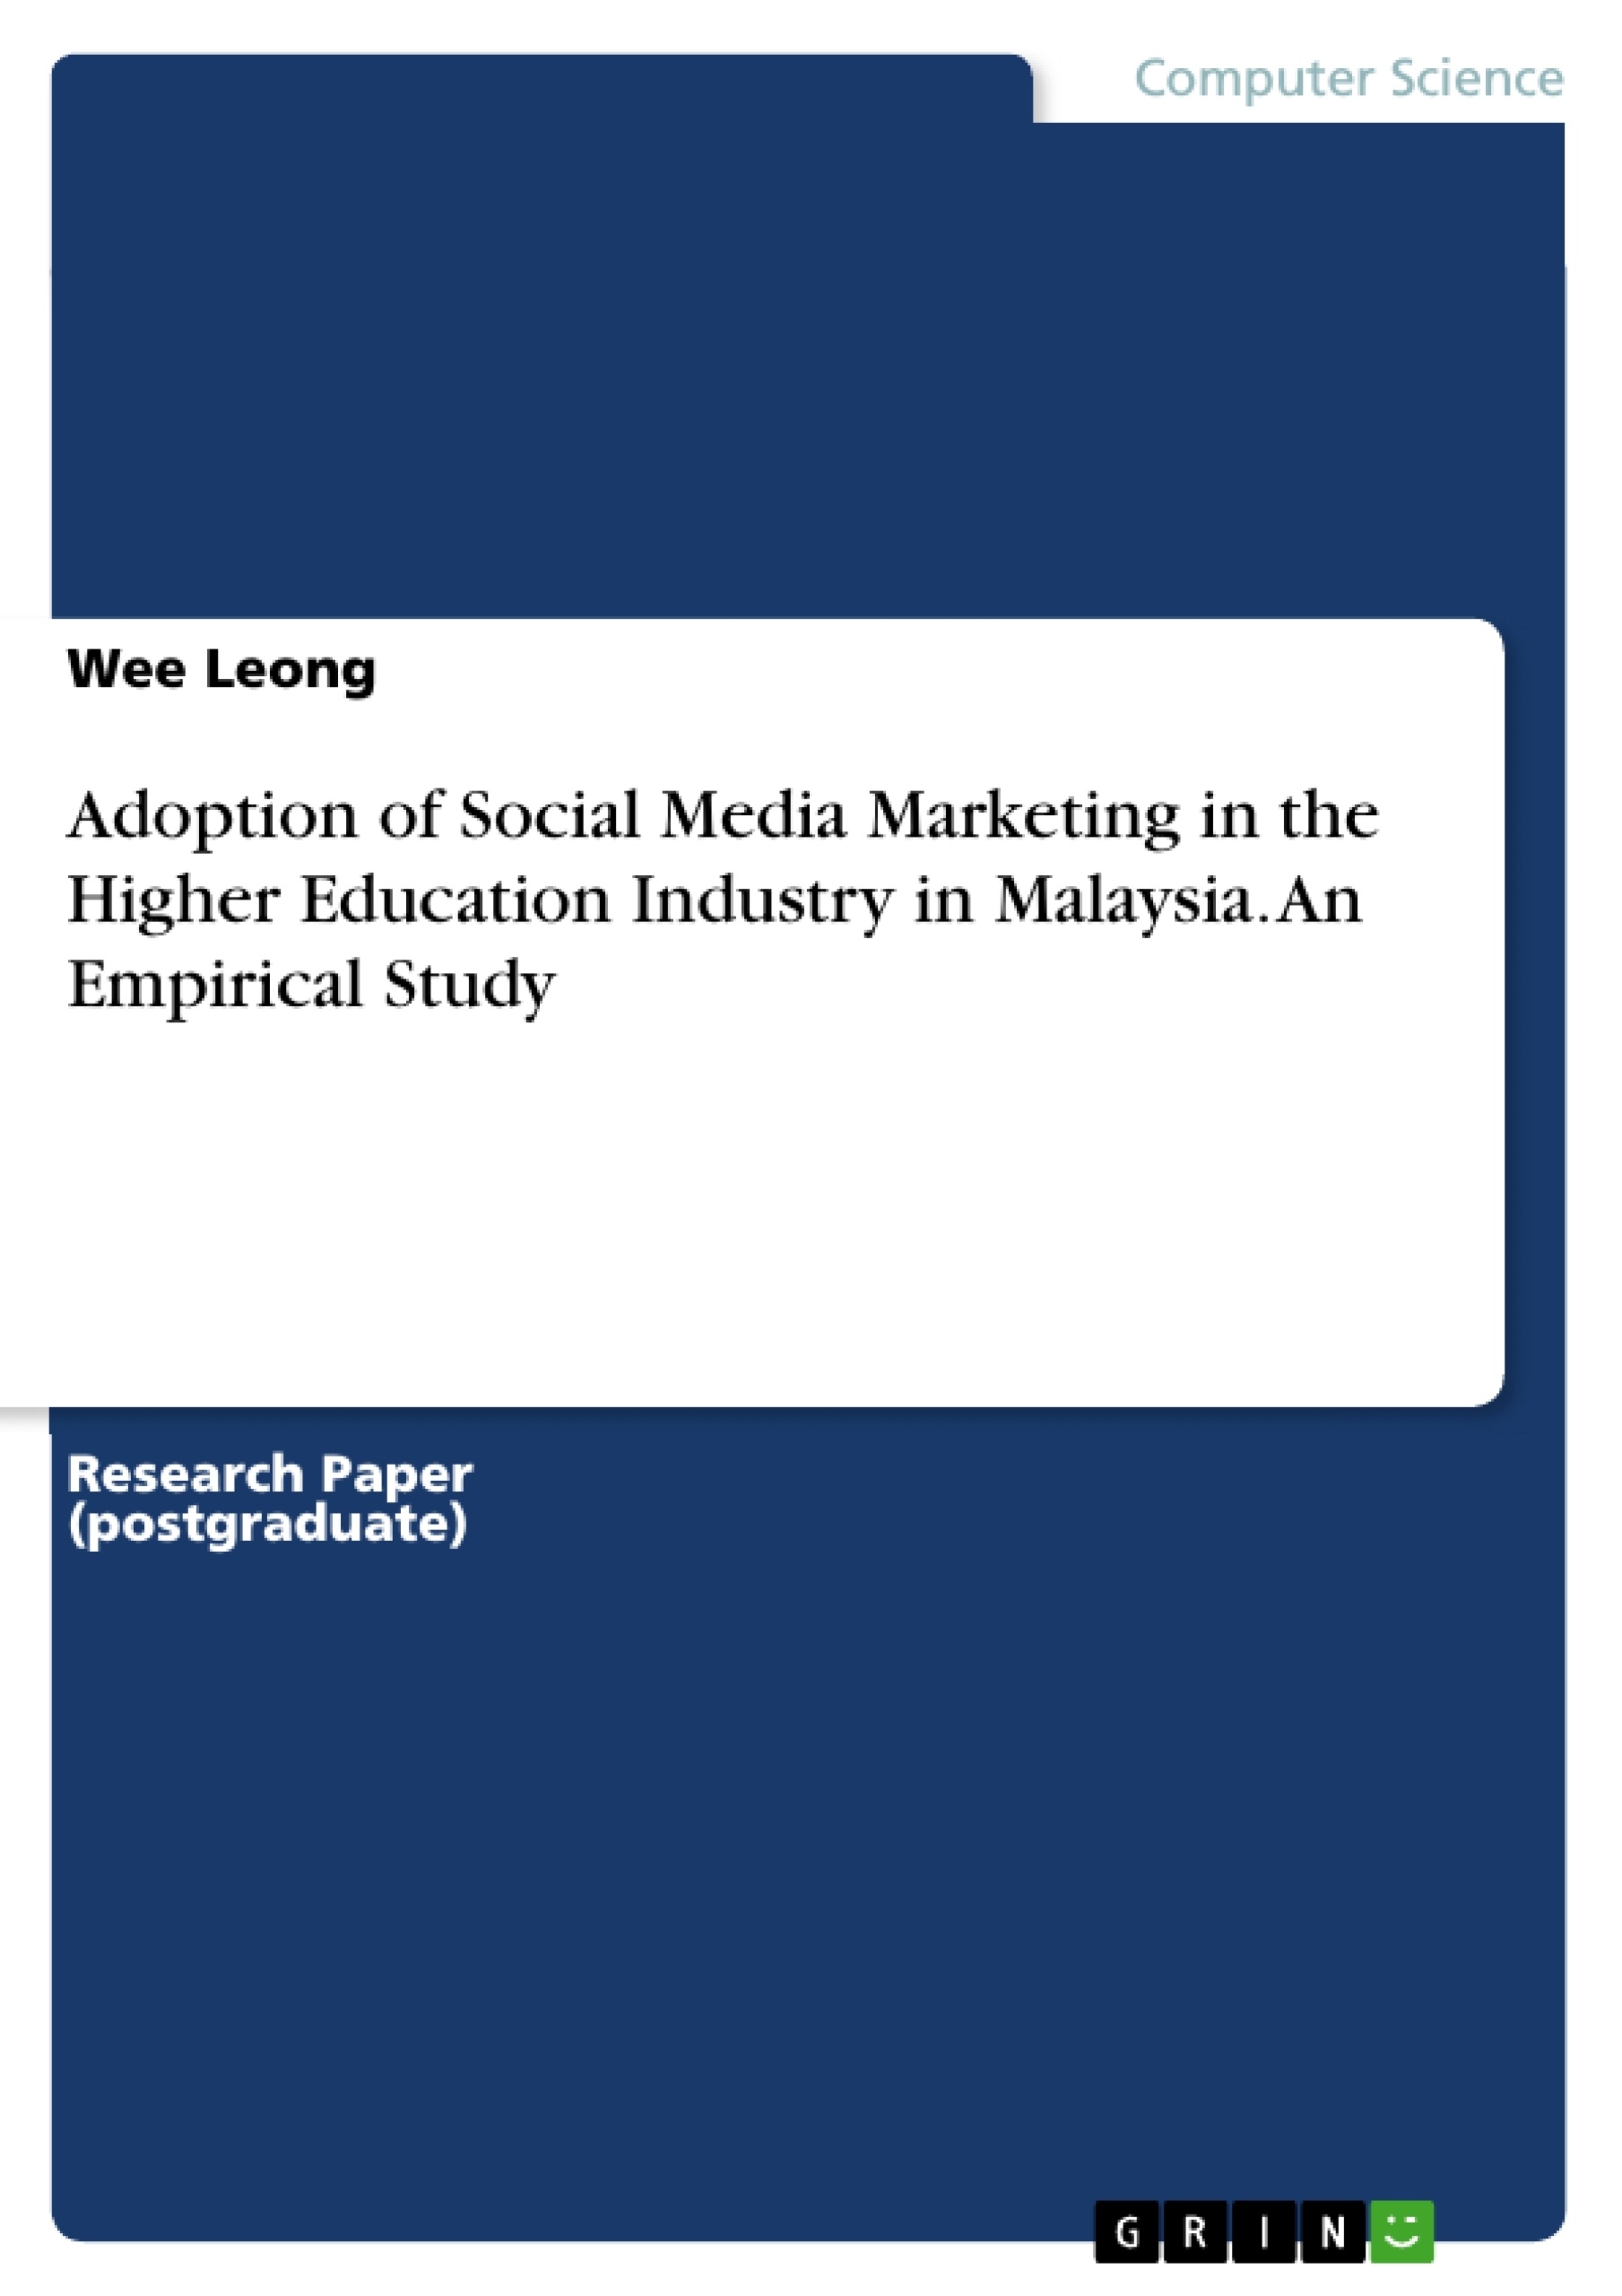 Master thesis social media marketing